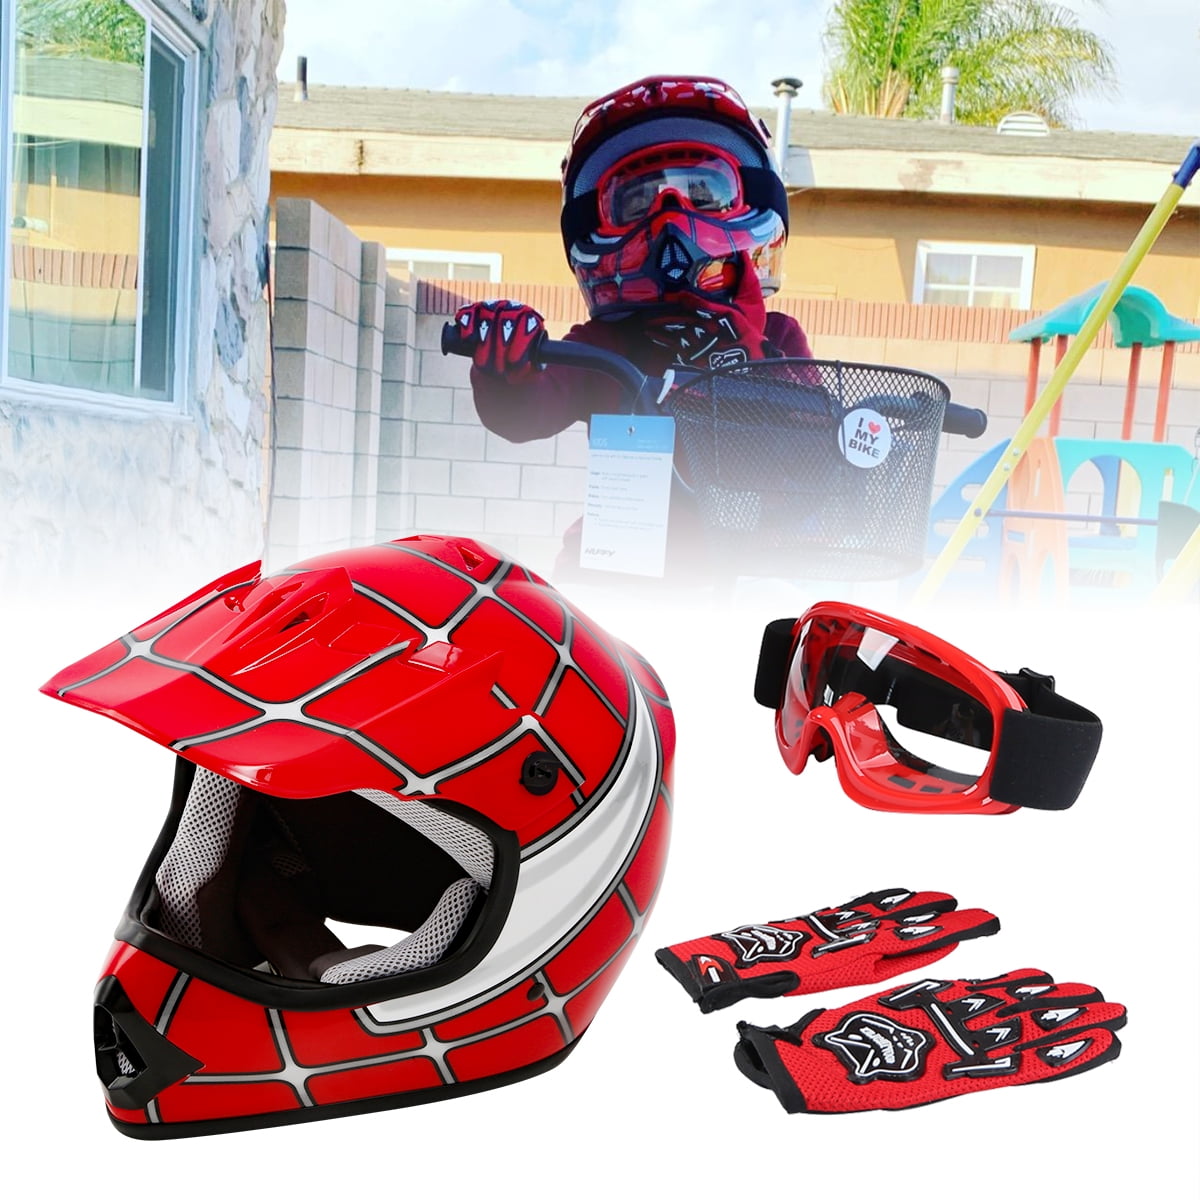 Duchinni D301 Kids White Full Face MX Youth Motorcycle Crash Helmet Brand New 